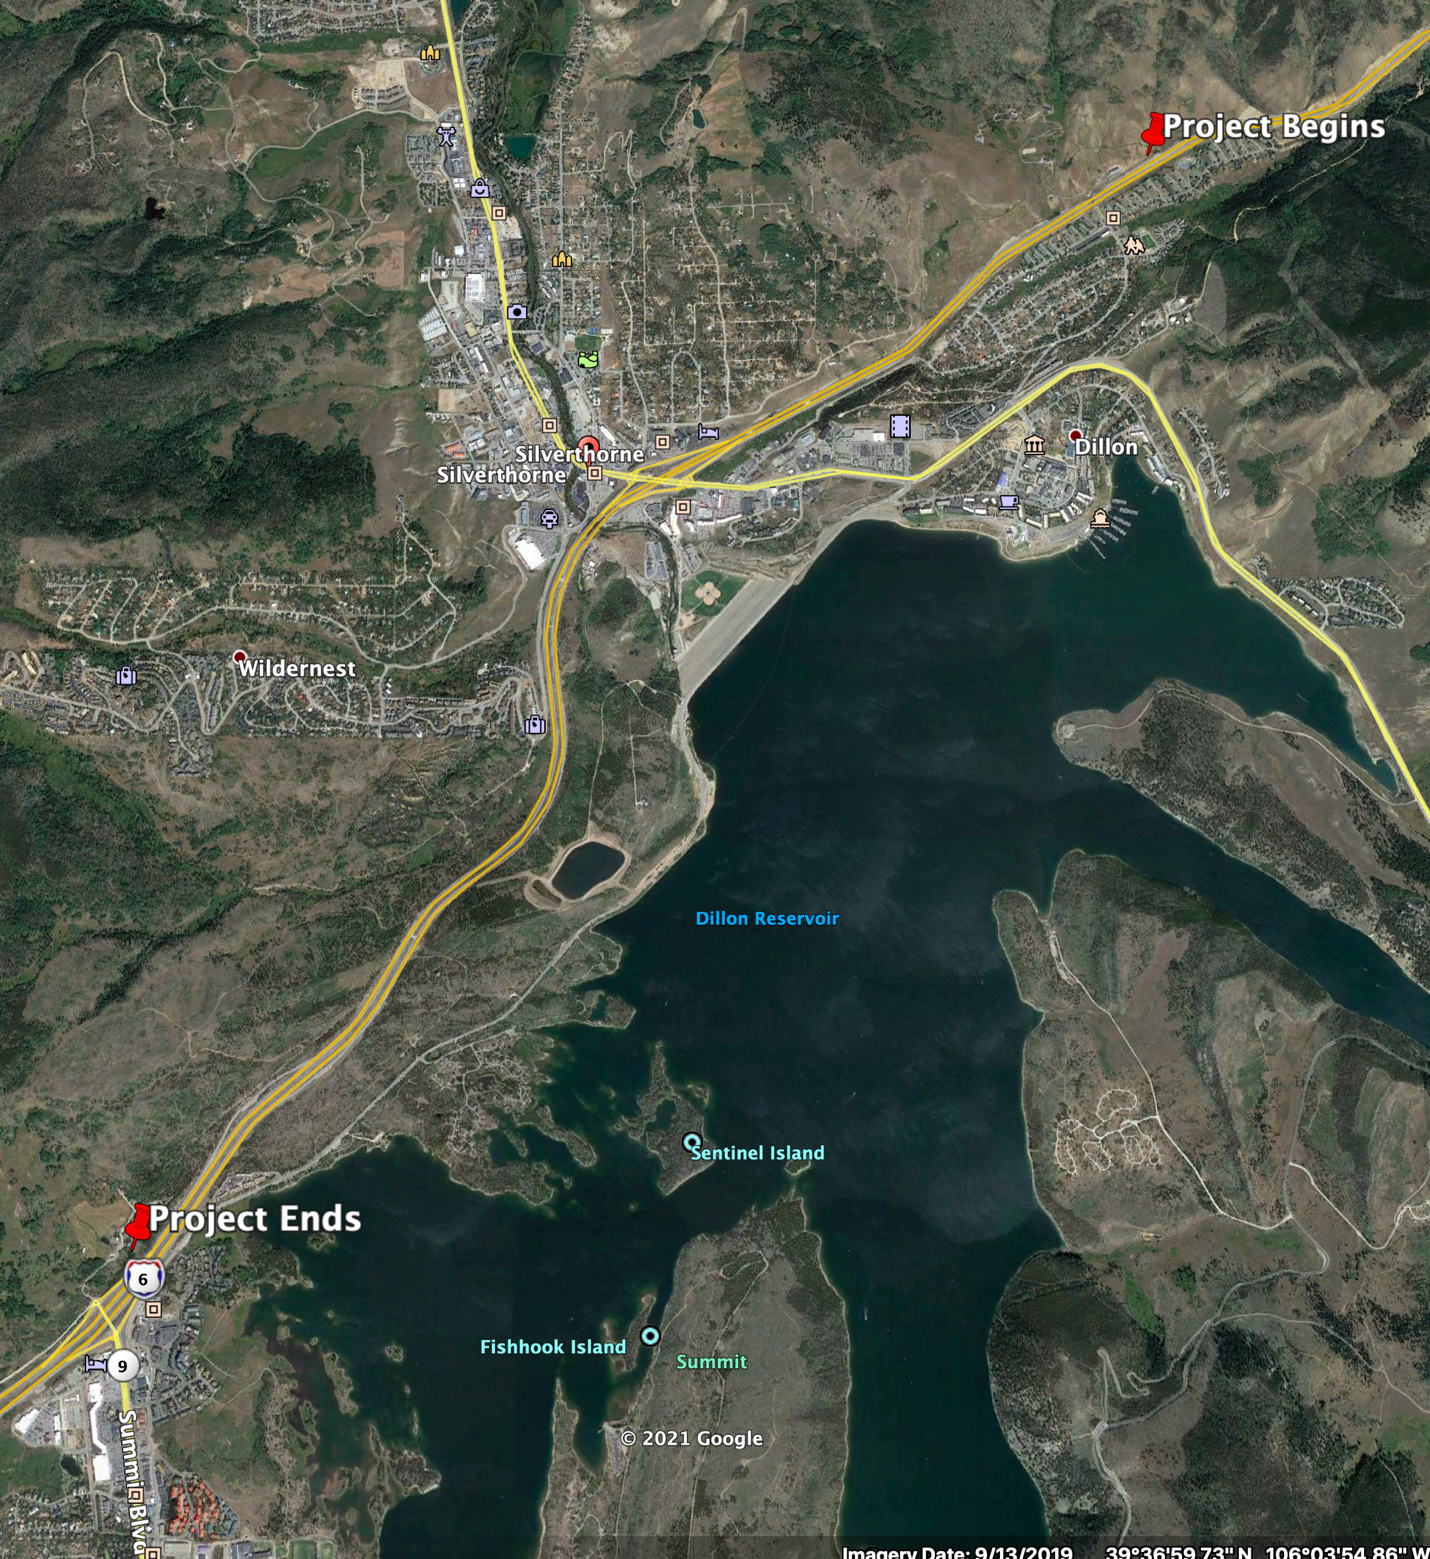 Silverthorne Google aerial map detail image